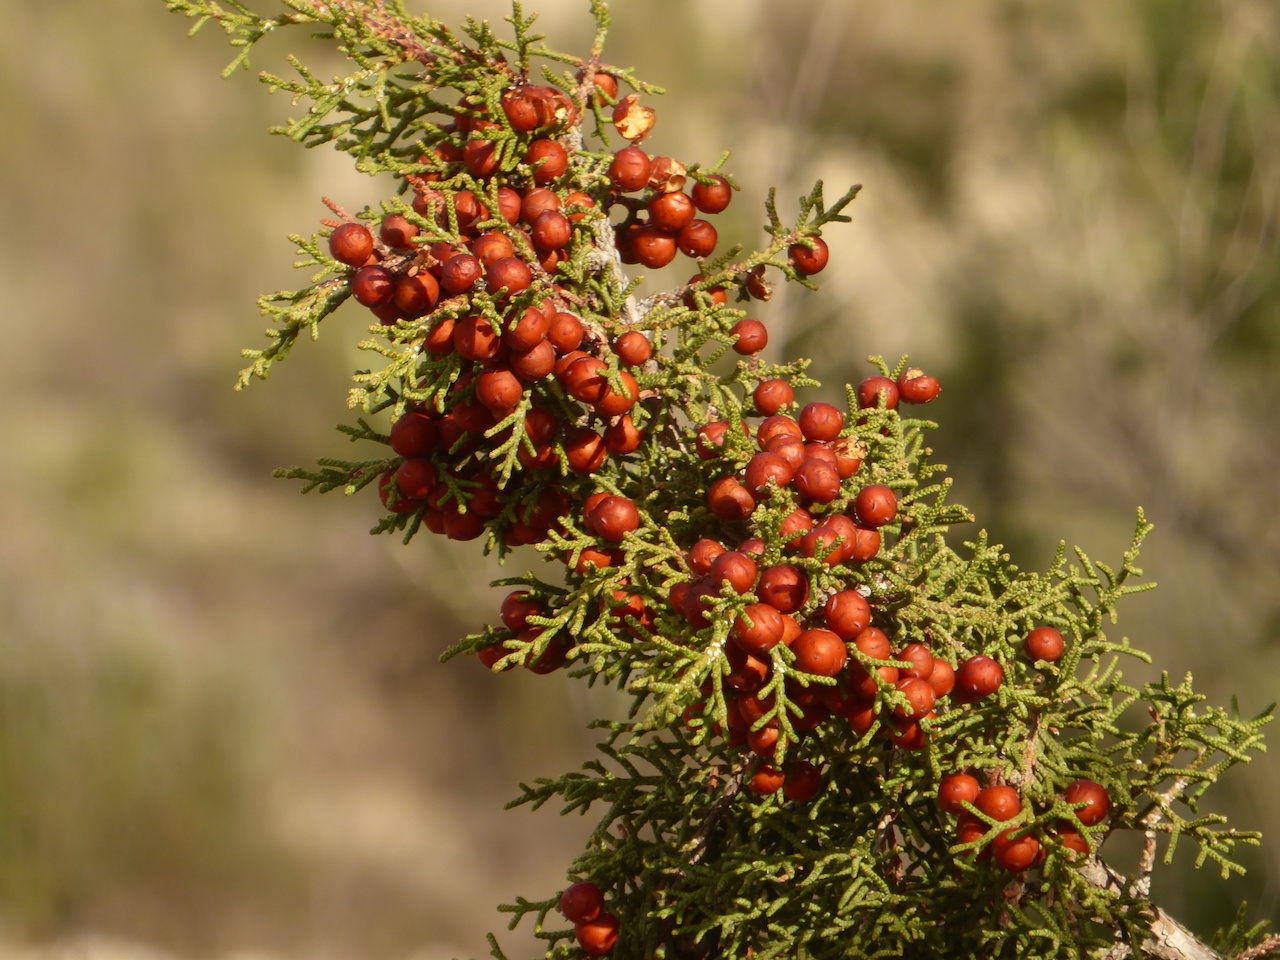 Juniperus phoenicea-Phoenician Juniper 10 seeds